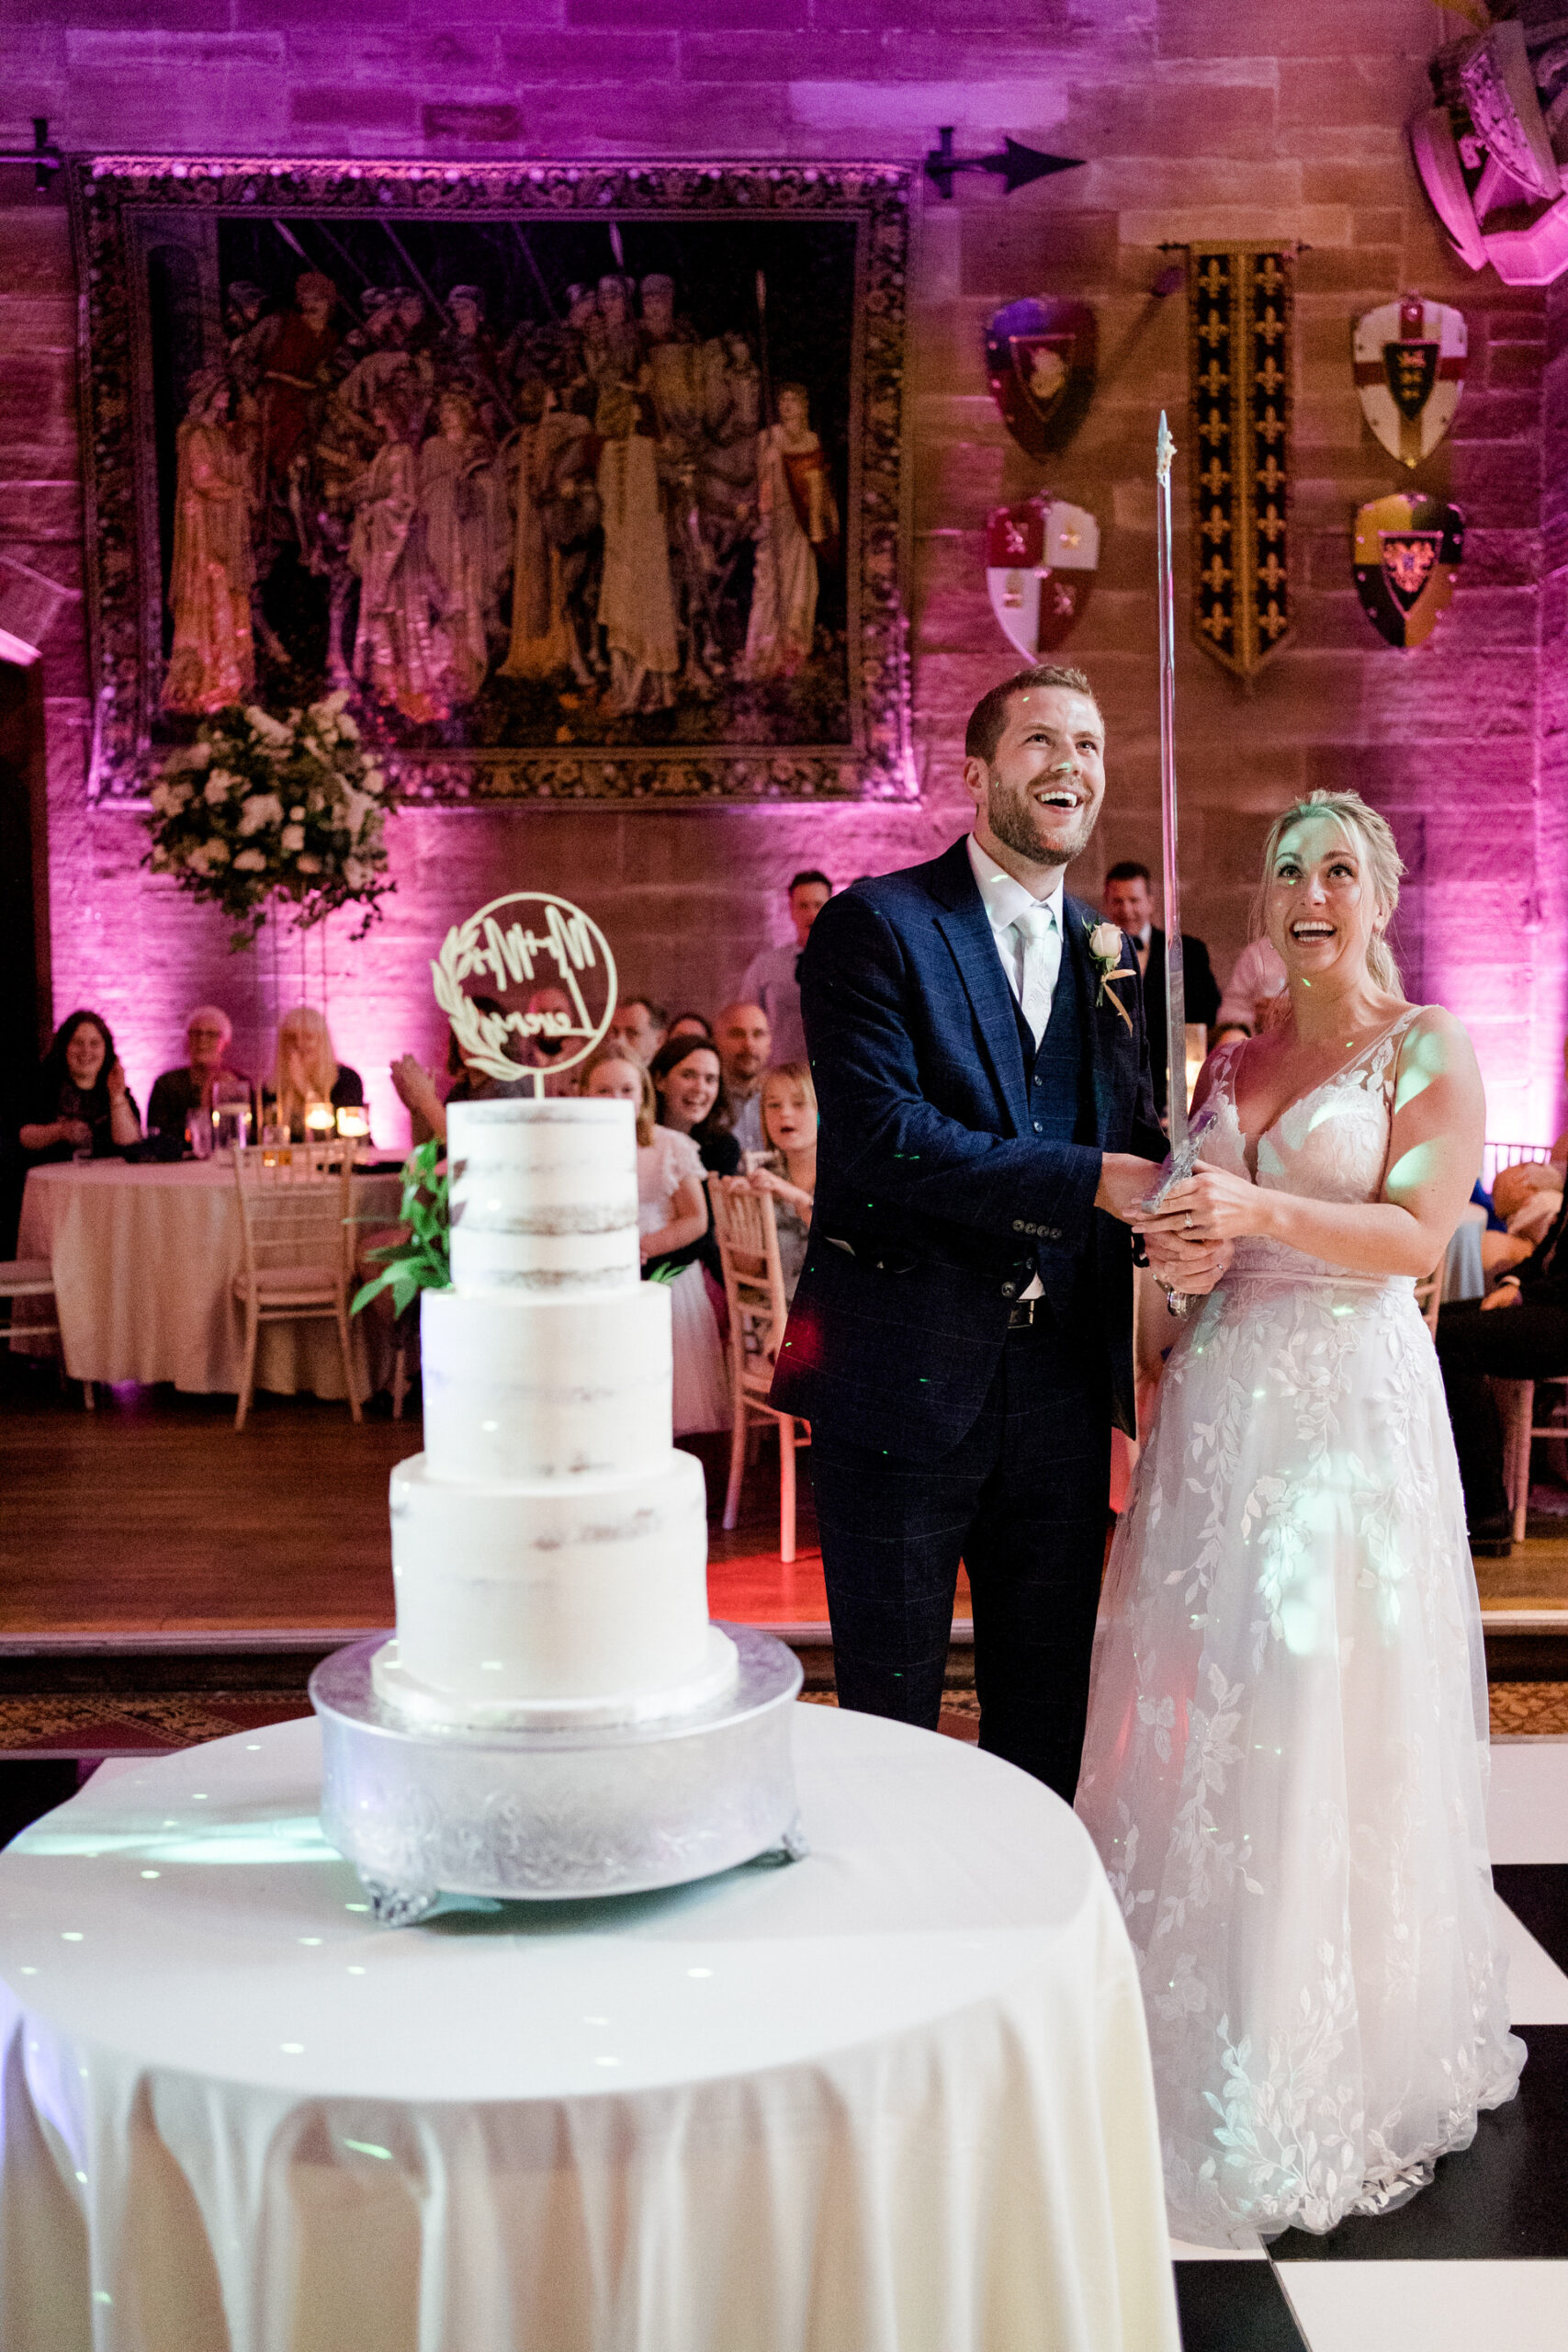 cake cutting at peckforton castle wedding